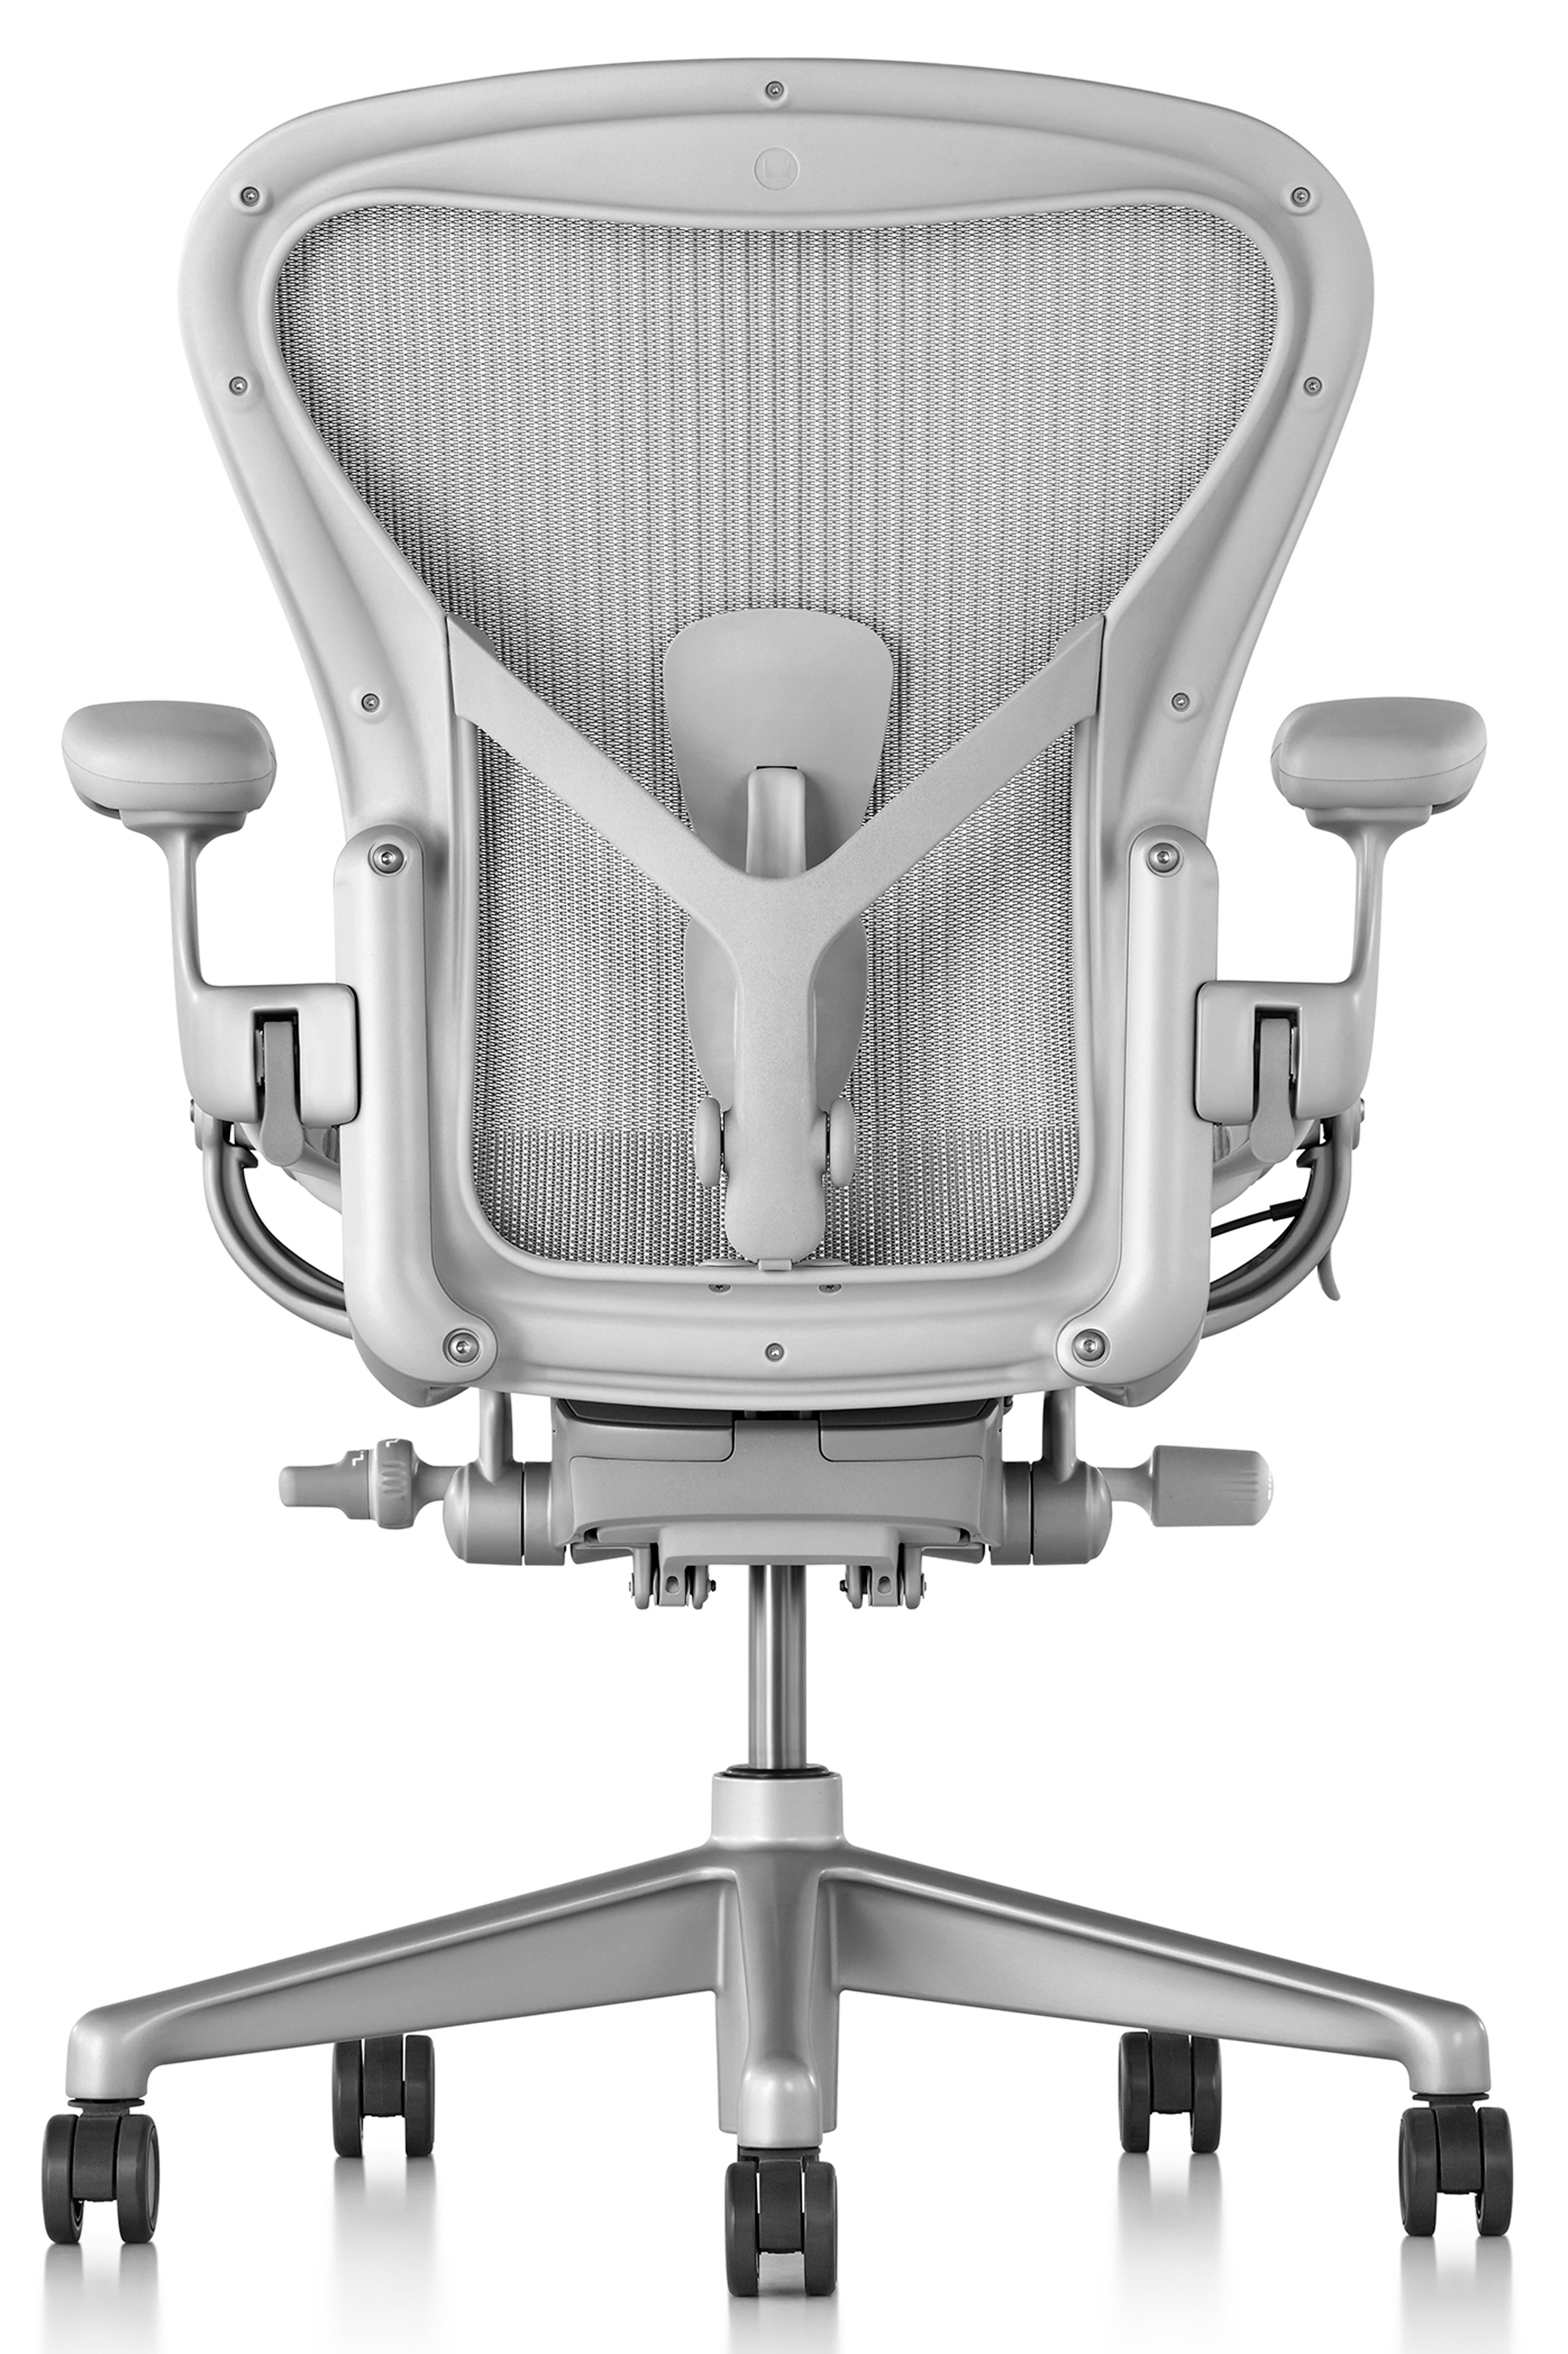 Herman Miller updates iconic Aeron office chair